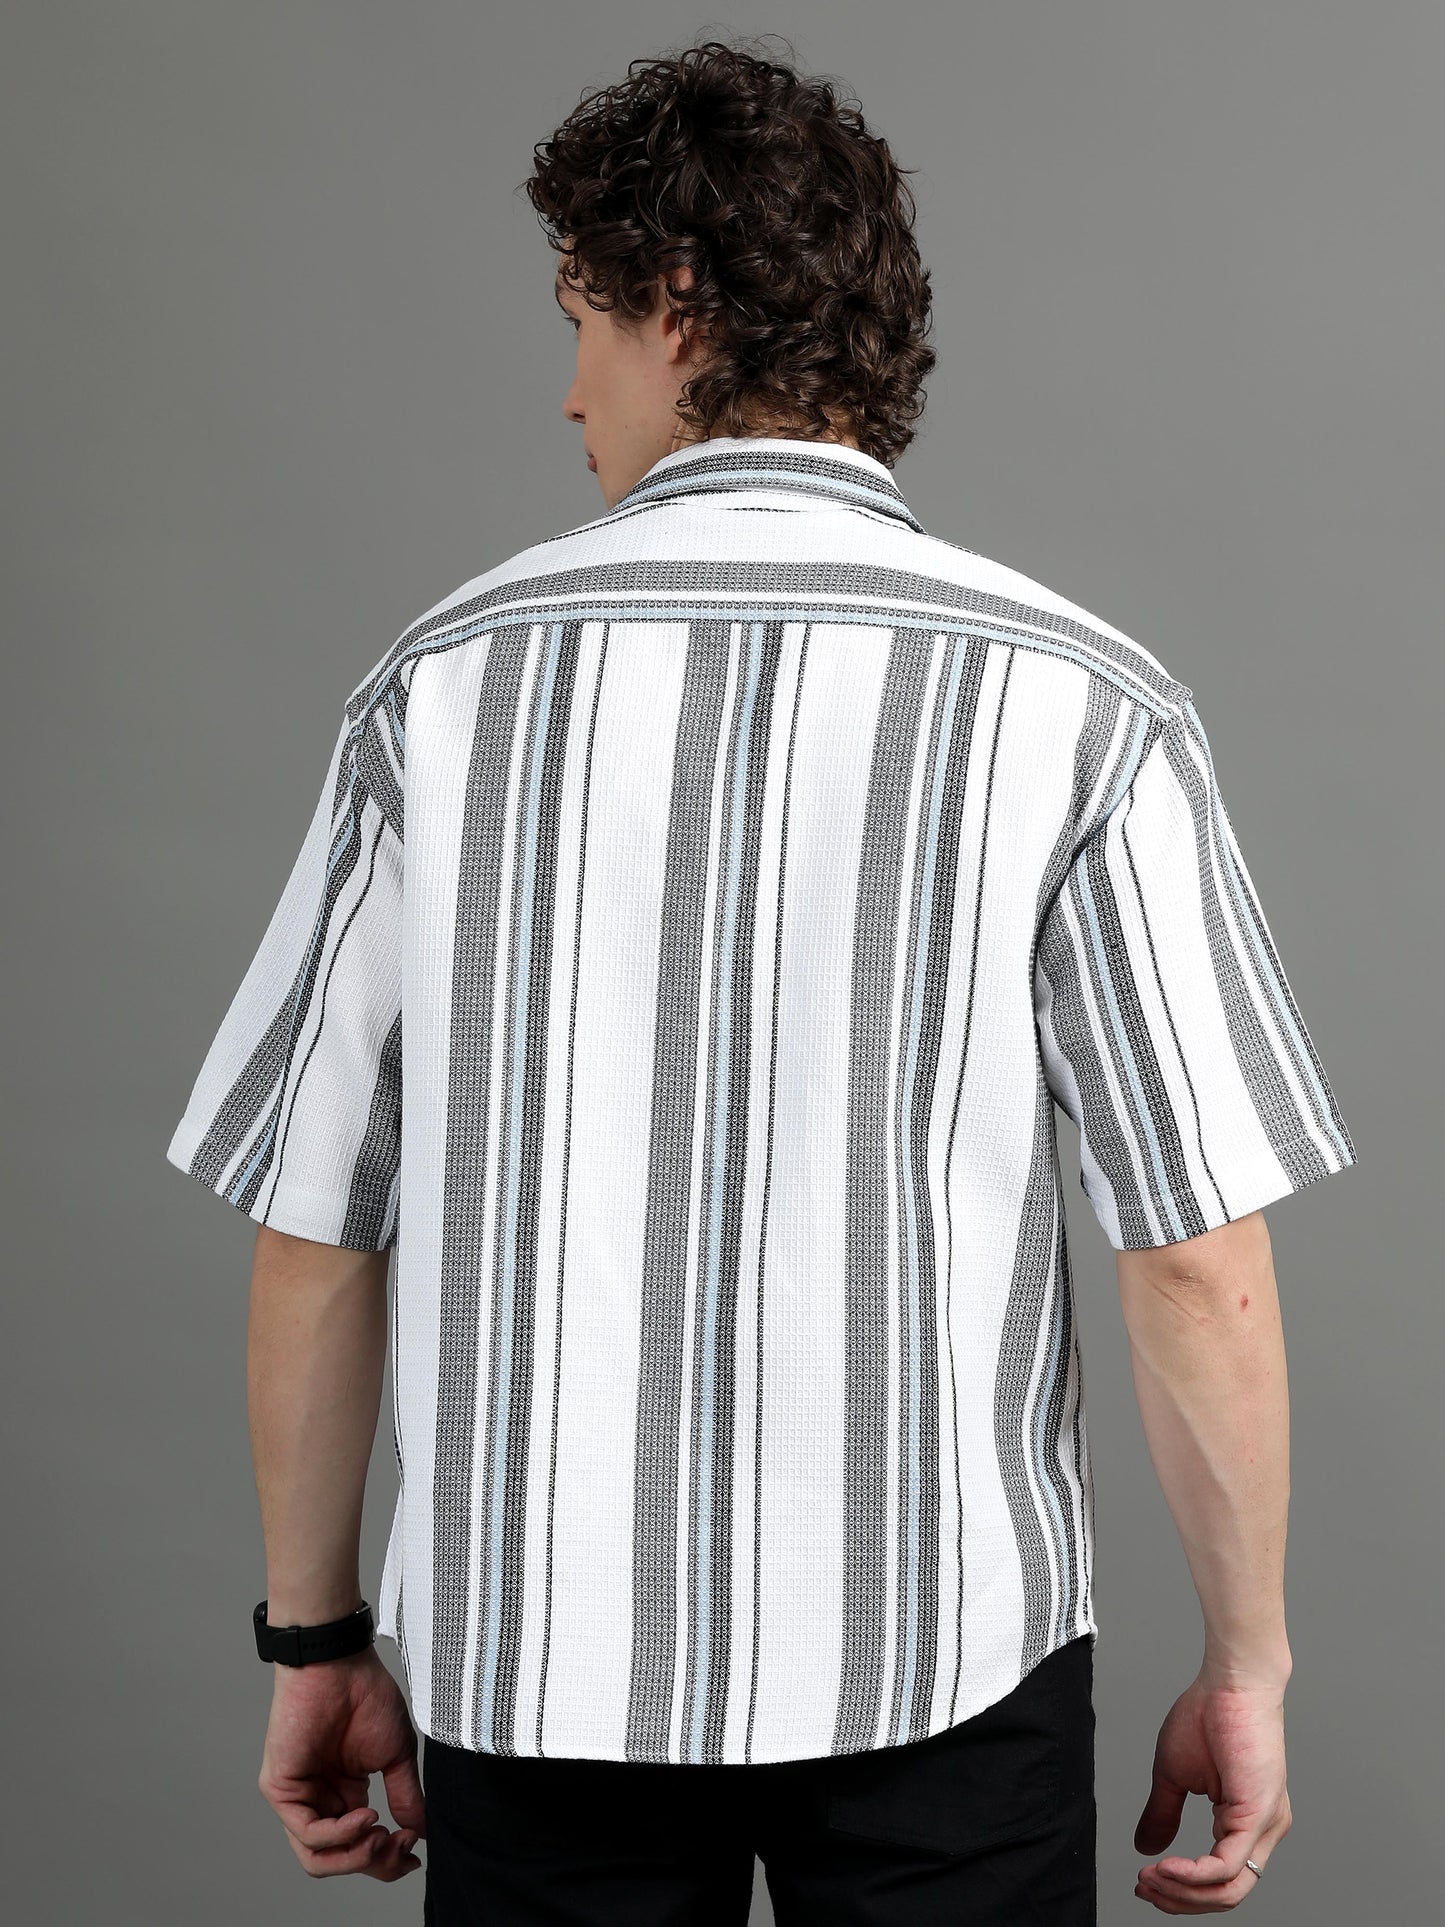 Premium Men Oversized Shirt, Yarn Dyed Stripes, Textured Fabric, Half Sleeve, Cotton, White